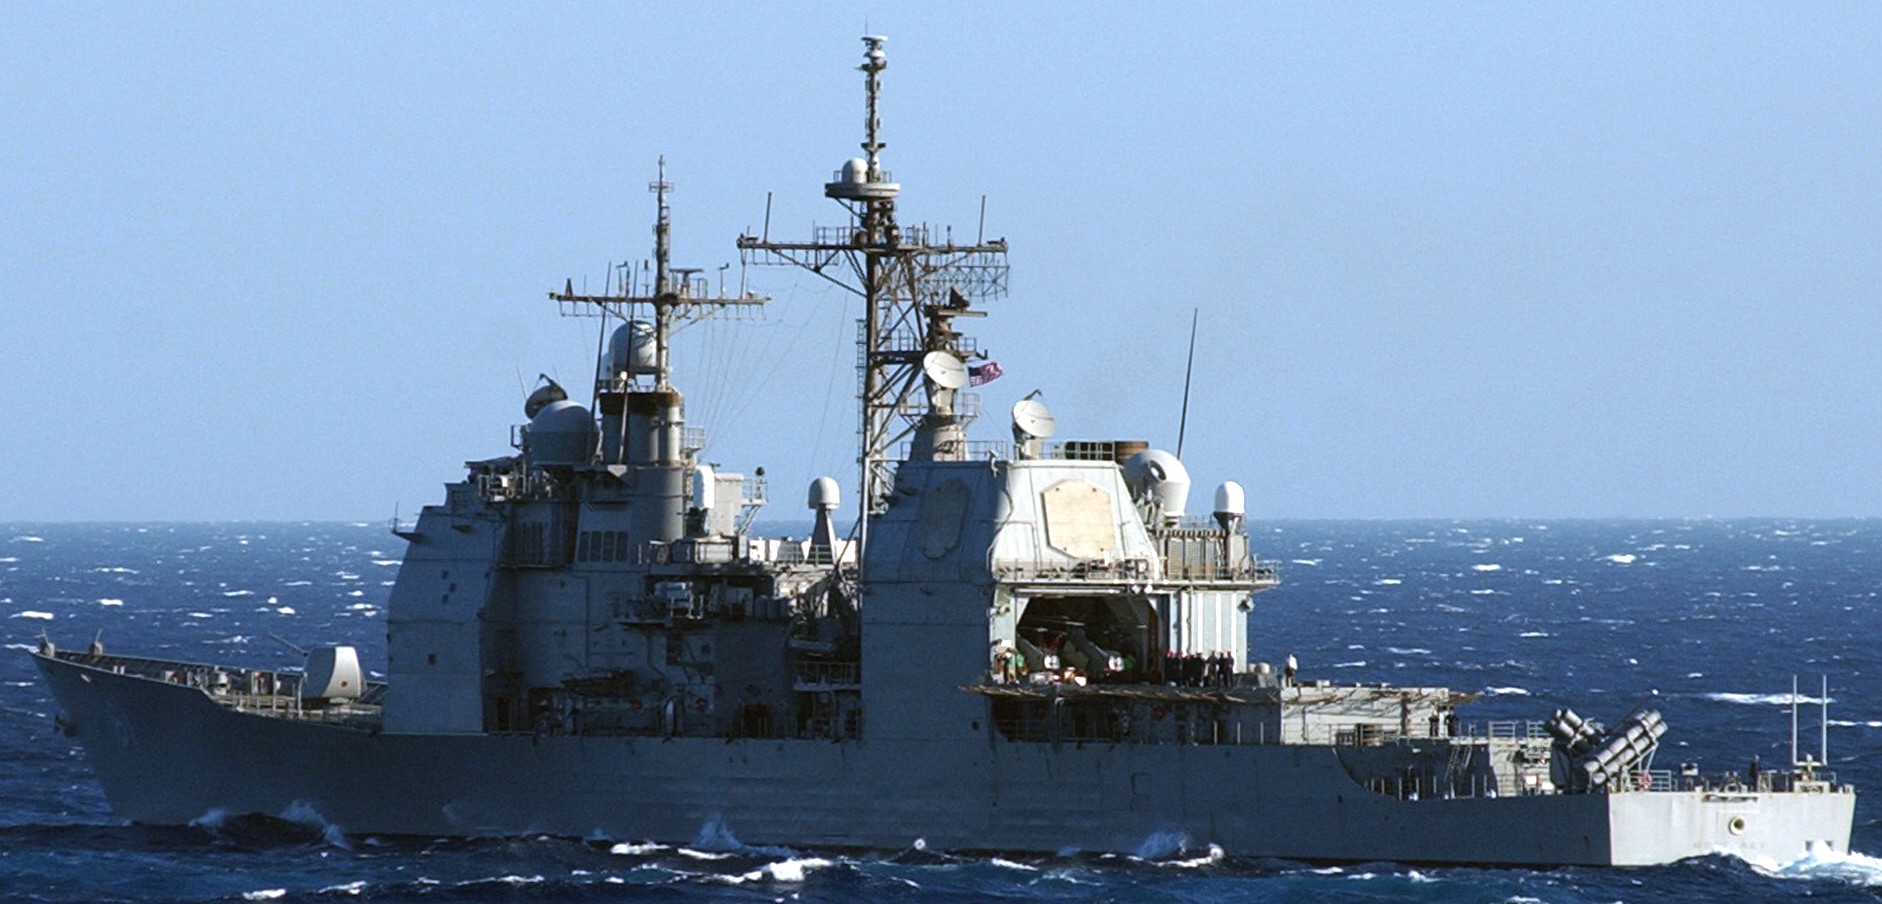 cg-61 uss monterey ticonderoga class guided missile cruiser aegis us navy red sea 07